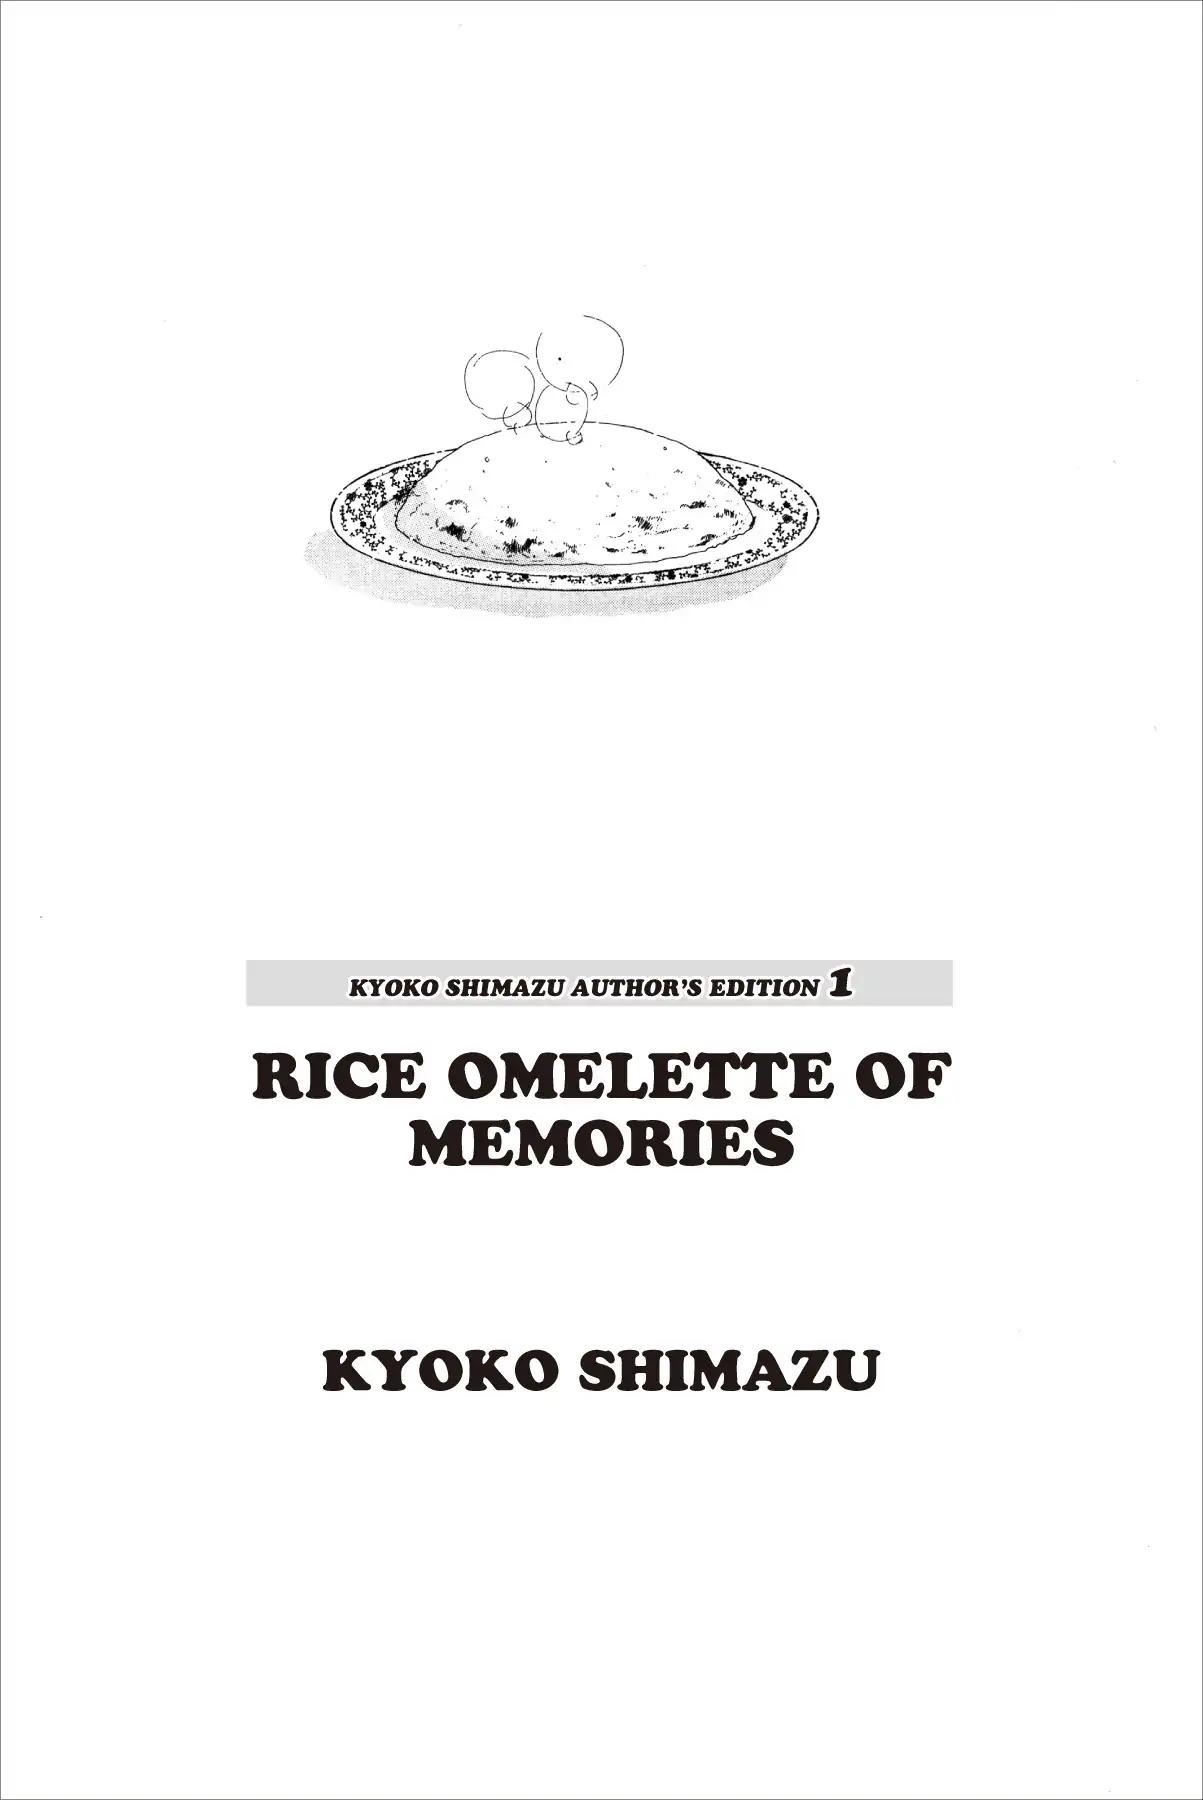 Kyoko Shimazu Author's Edition Vol.1 Rice Omelette Of Memories